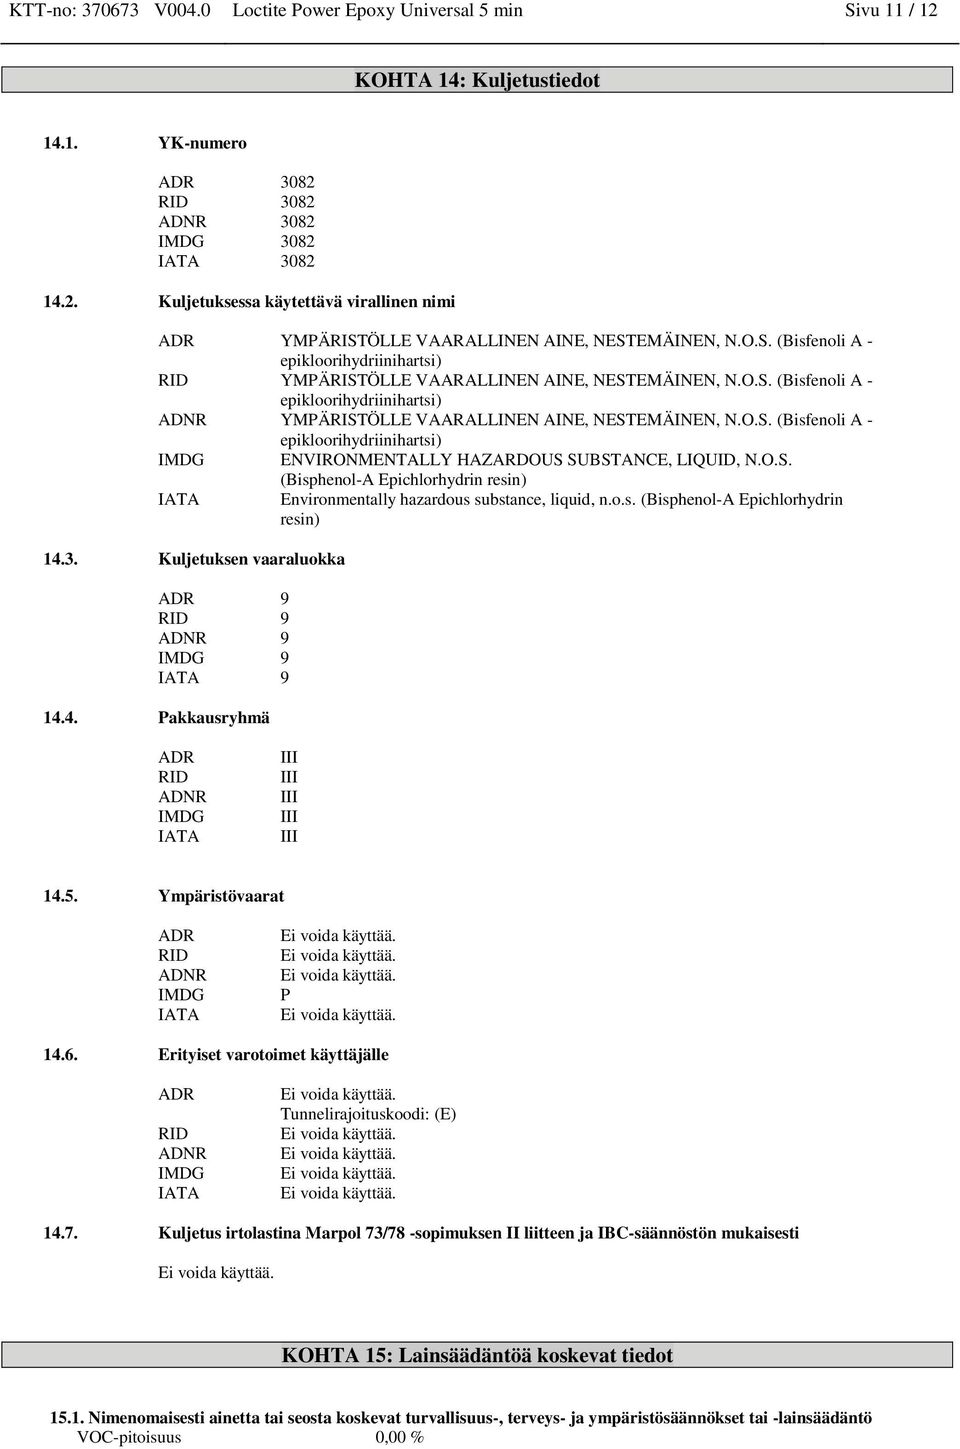 O.S. (Bisphenol-A Epichlorhydrin resin) IATA Environmentally hazardous substance, liquid, n.o.s. (Bisphenol-A Epichlorhydrin resin) 14.3. Kuljetuksen vaaraluokka ADR 9 RID 9 ADNR 9 IMDG 9 IATA 9 14.4. Pakkausryhmä ADR RID ADNR IMDG IATA III III III III III 14.